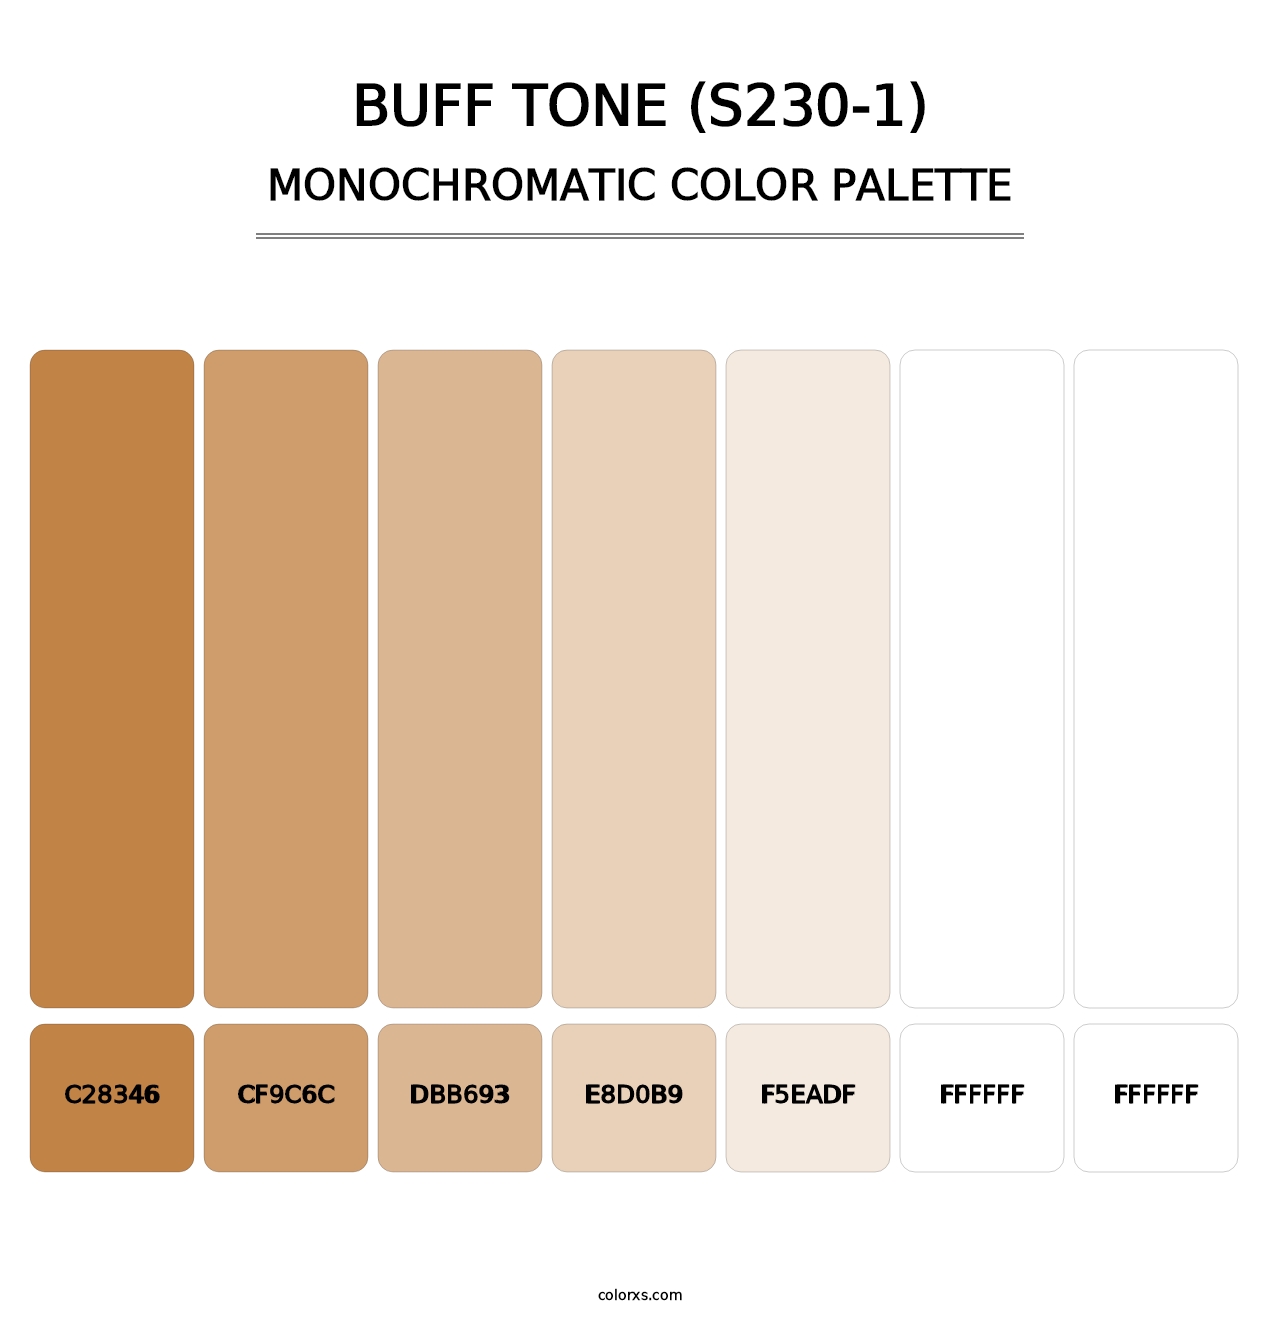 Buff Tone (S230-1) - Monochromatic Color Palette